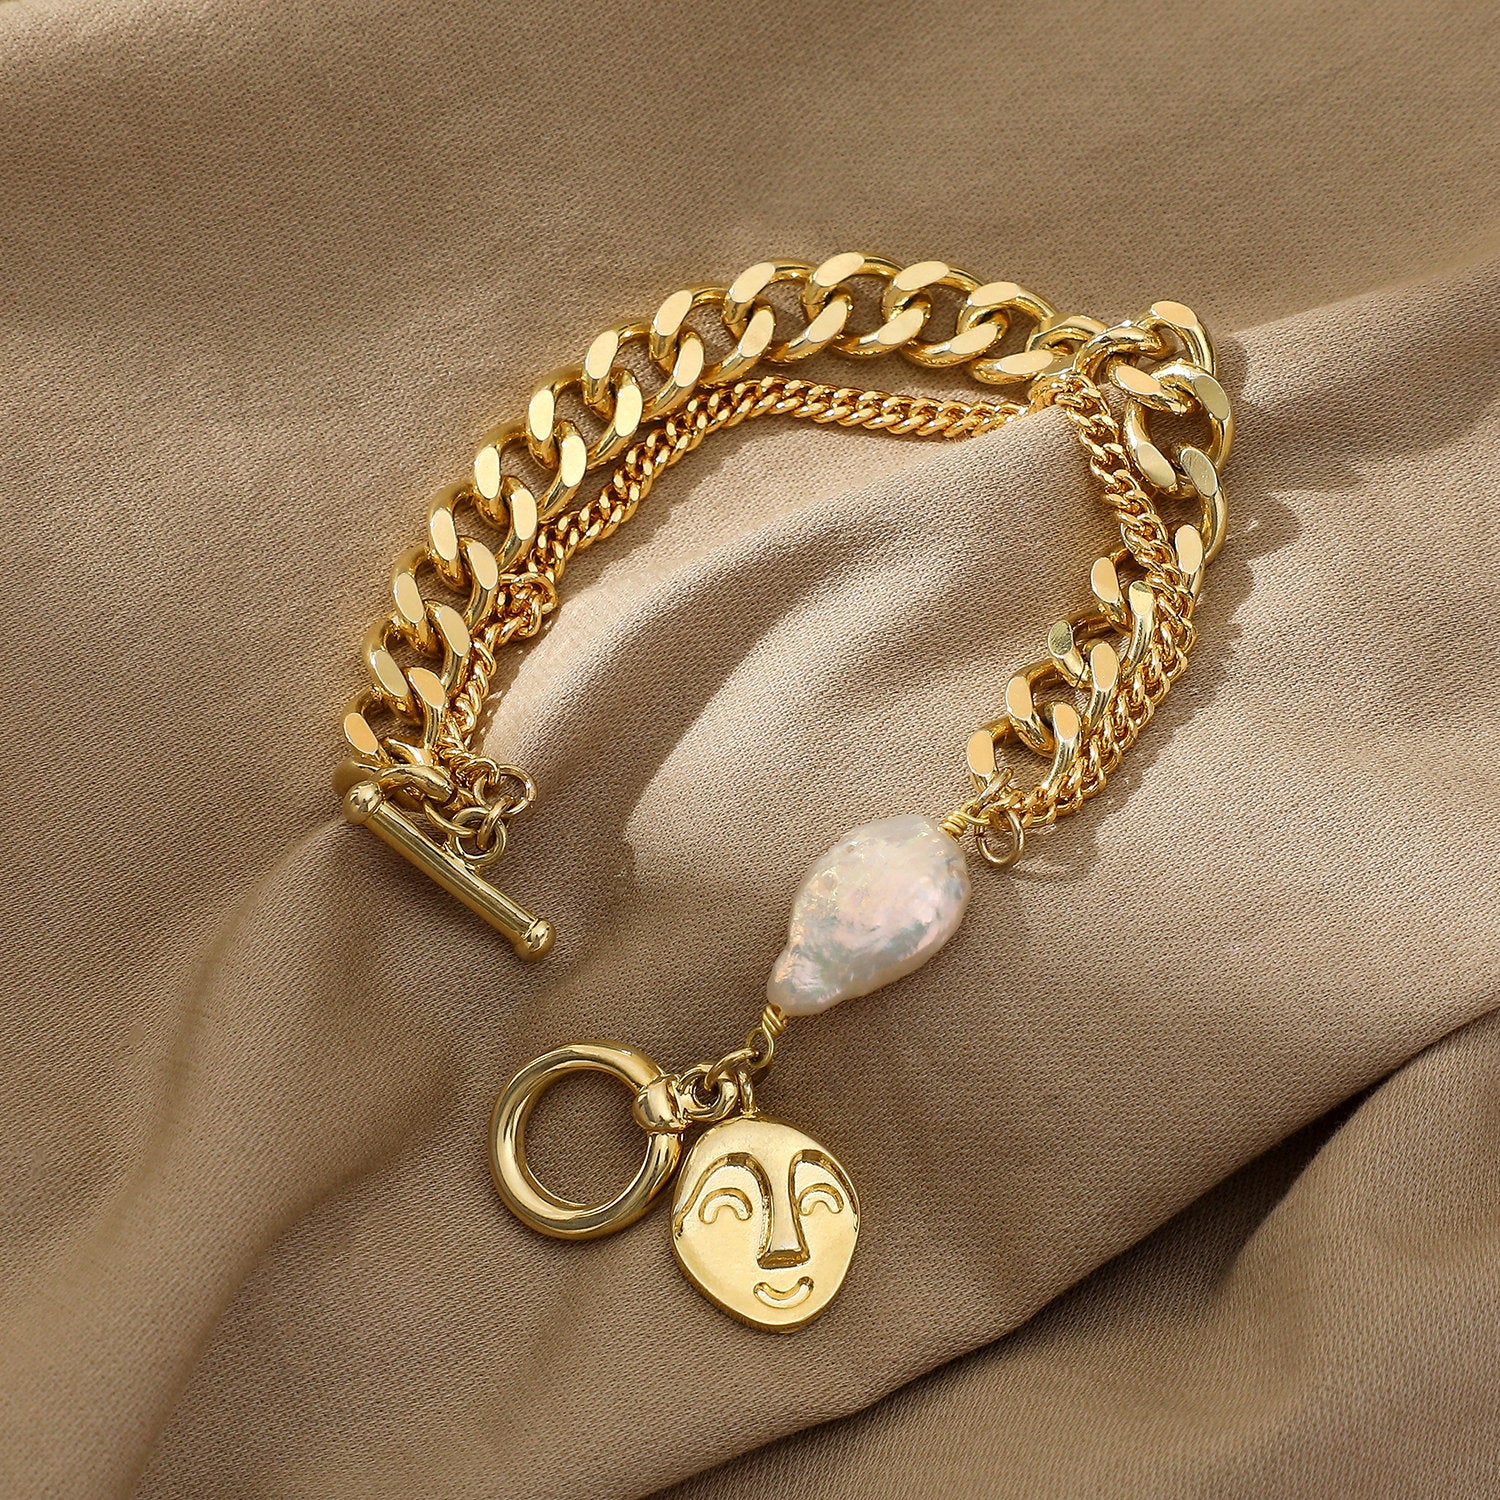 Bracelet Engravable Heart Friendship Bracelet Sbb0279 Black/Gold Wholesale Jewelry Website Black/Gold Unisex